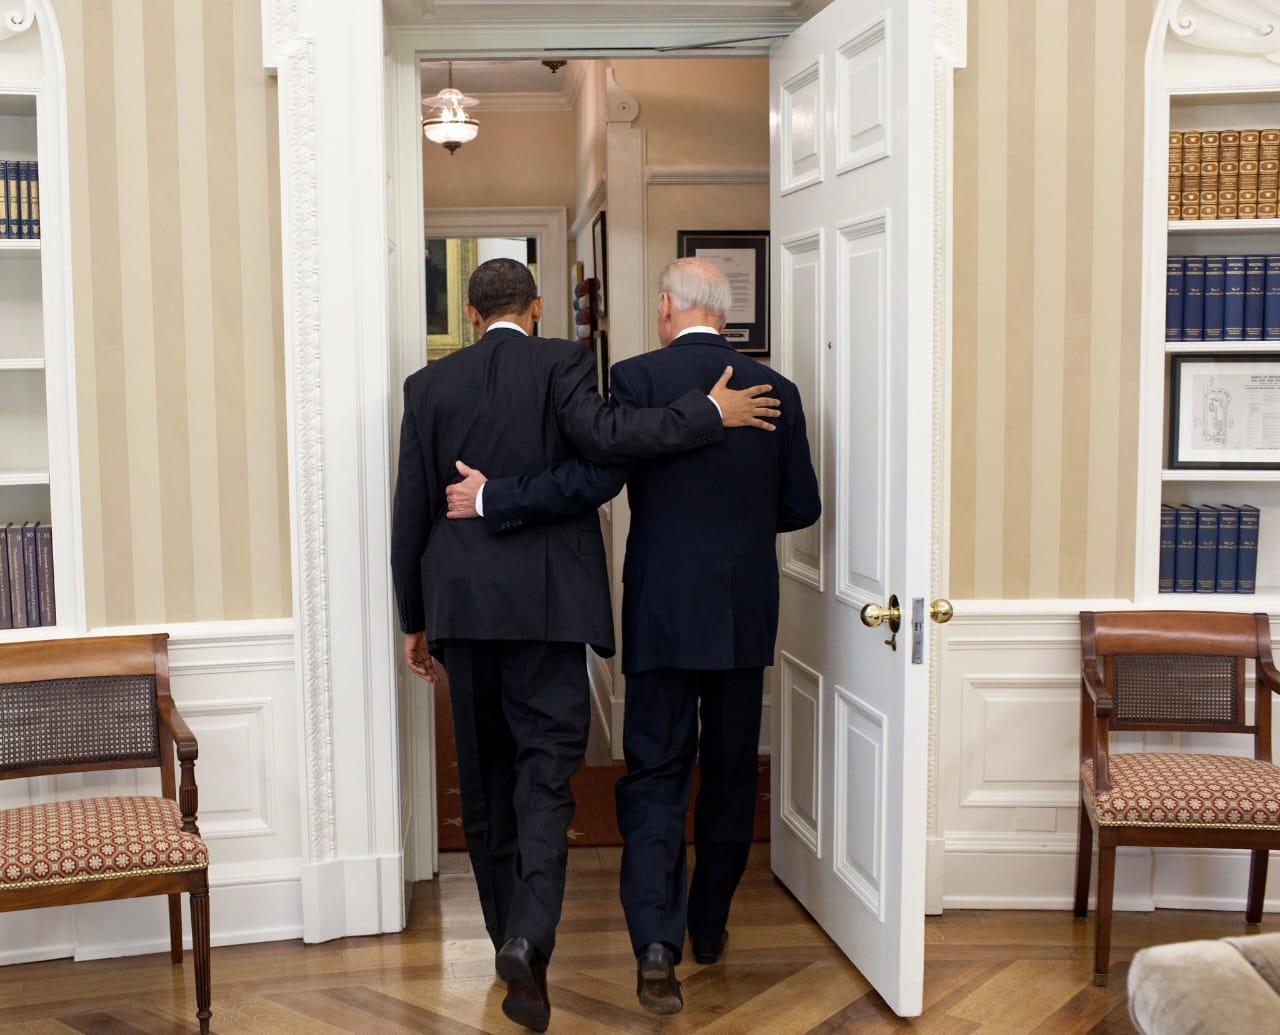 Selamati Joe Biden, Barrack Obama: This is your time